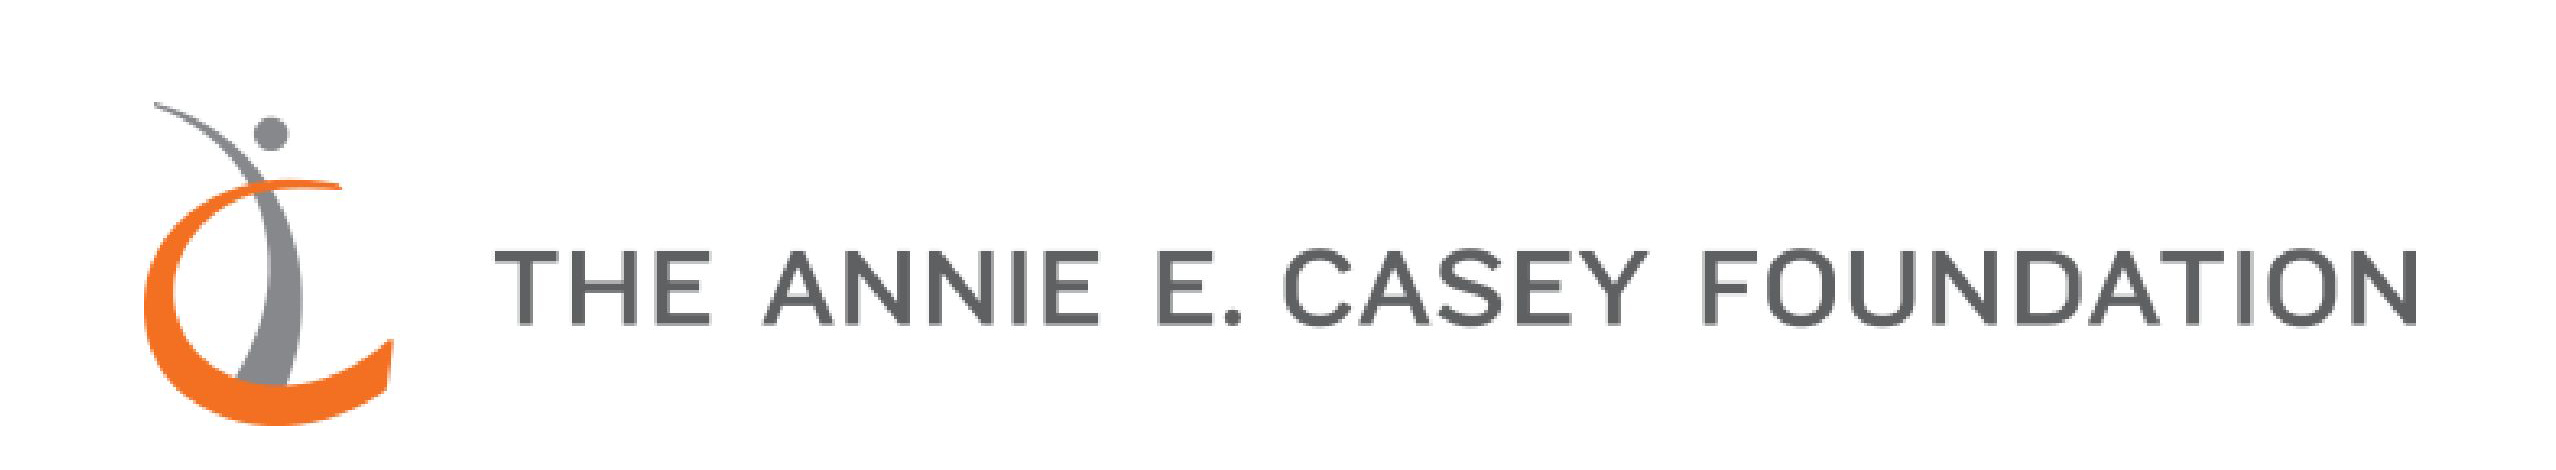 aecf-annie-e-casey-foundation-logo-pdf